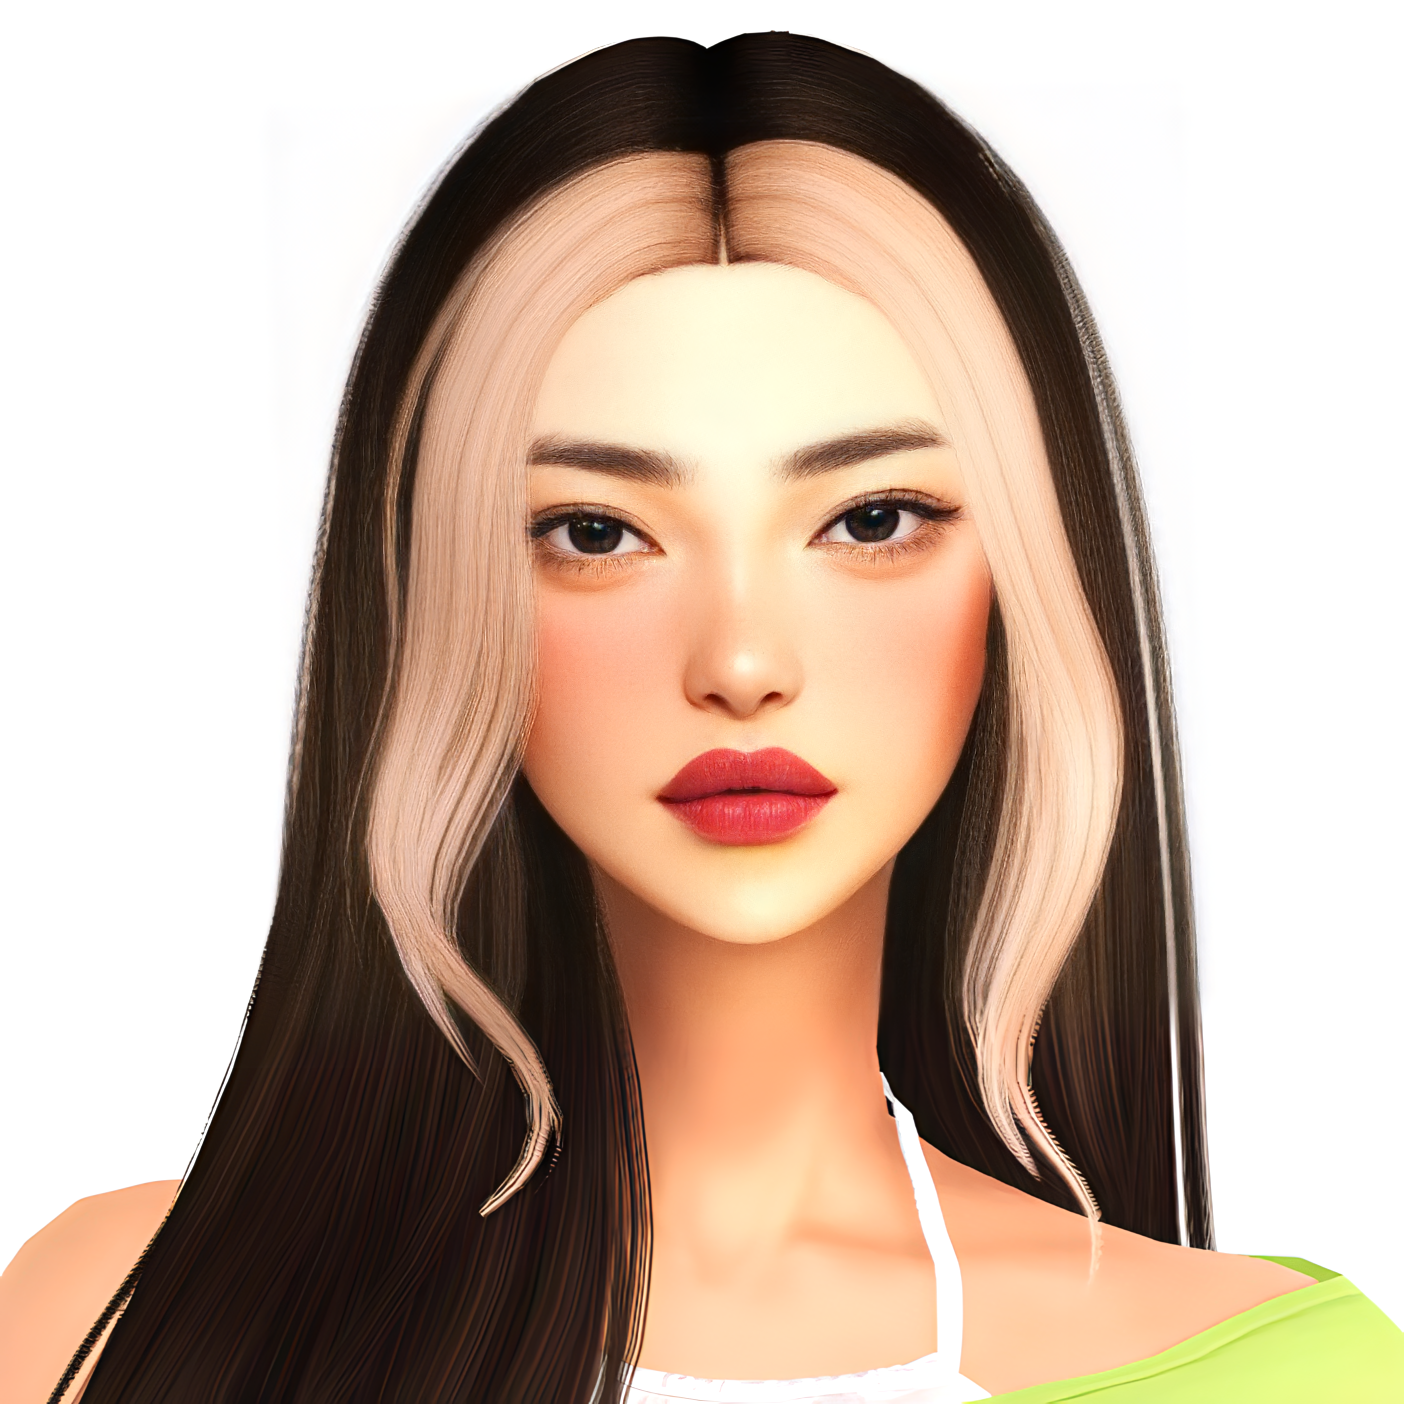 Girl's Vintage（13 items） - The Sims 4 Create a Sim - CurseForge